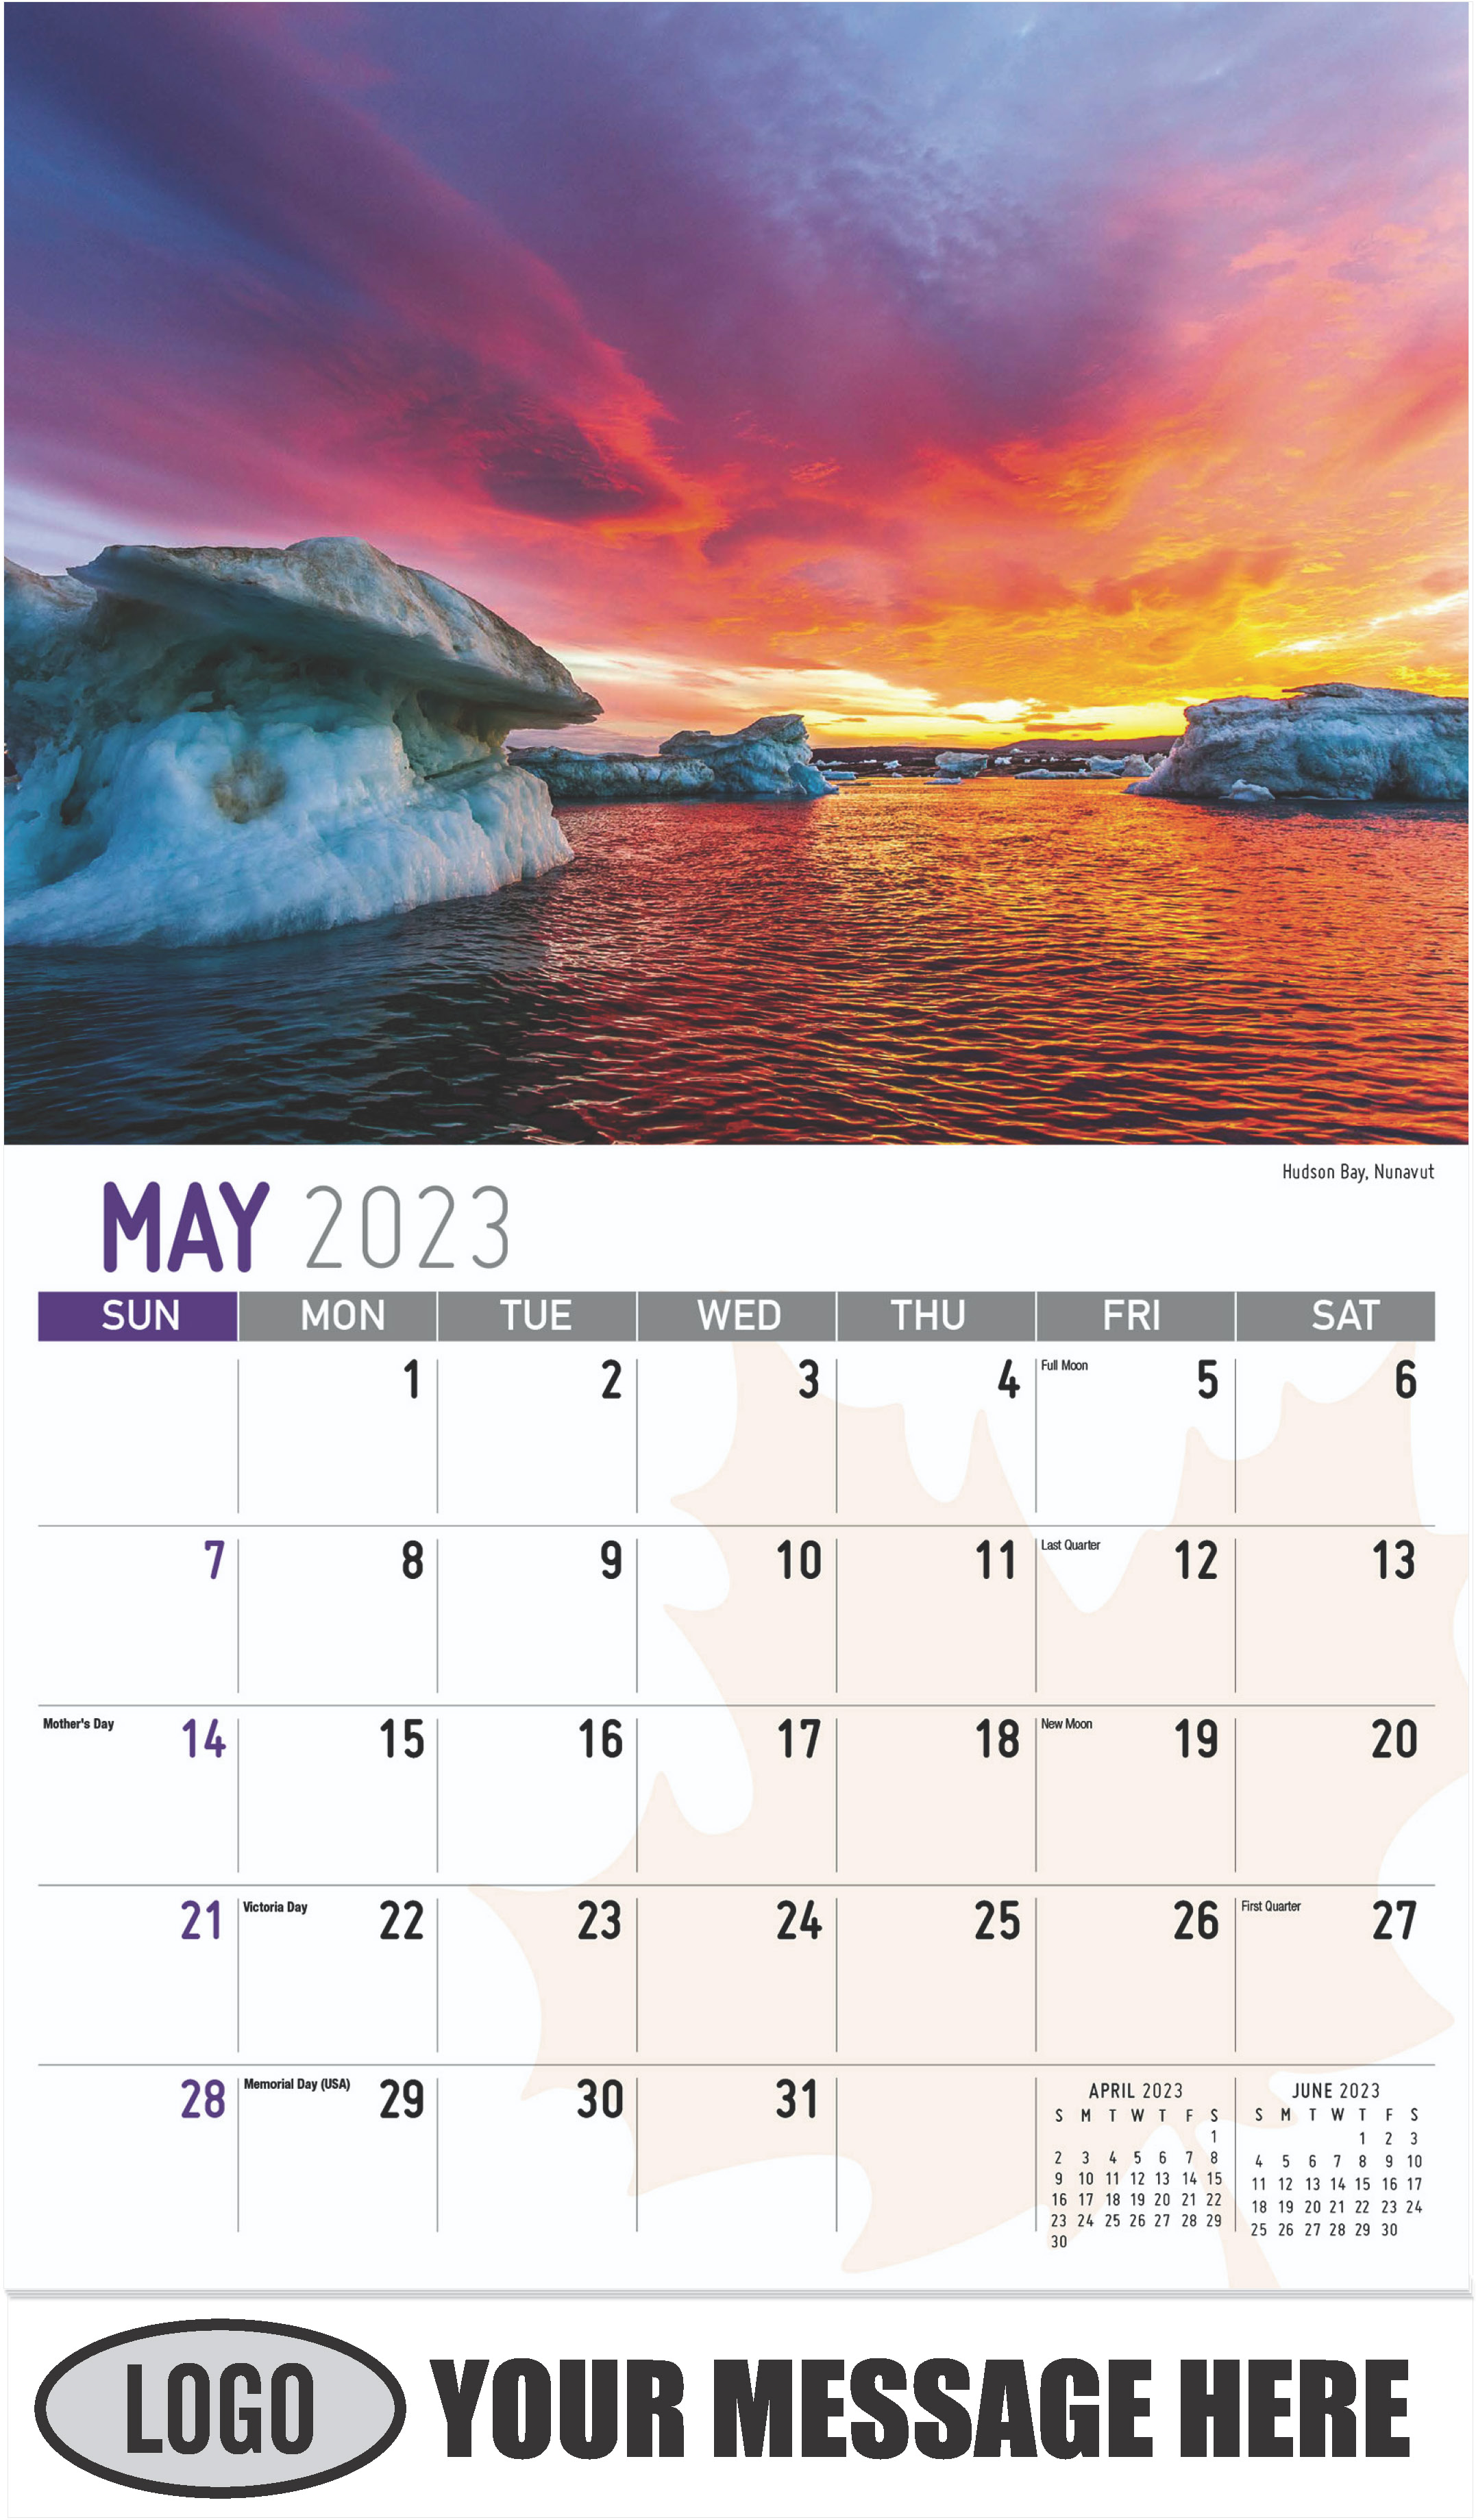 Hudson Bay, Nunavut - May - Scenes of Canada 2023 Promotional Calendar